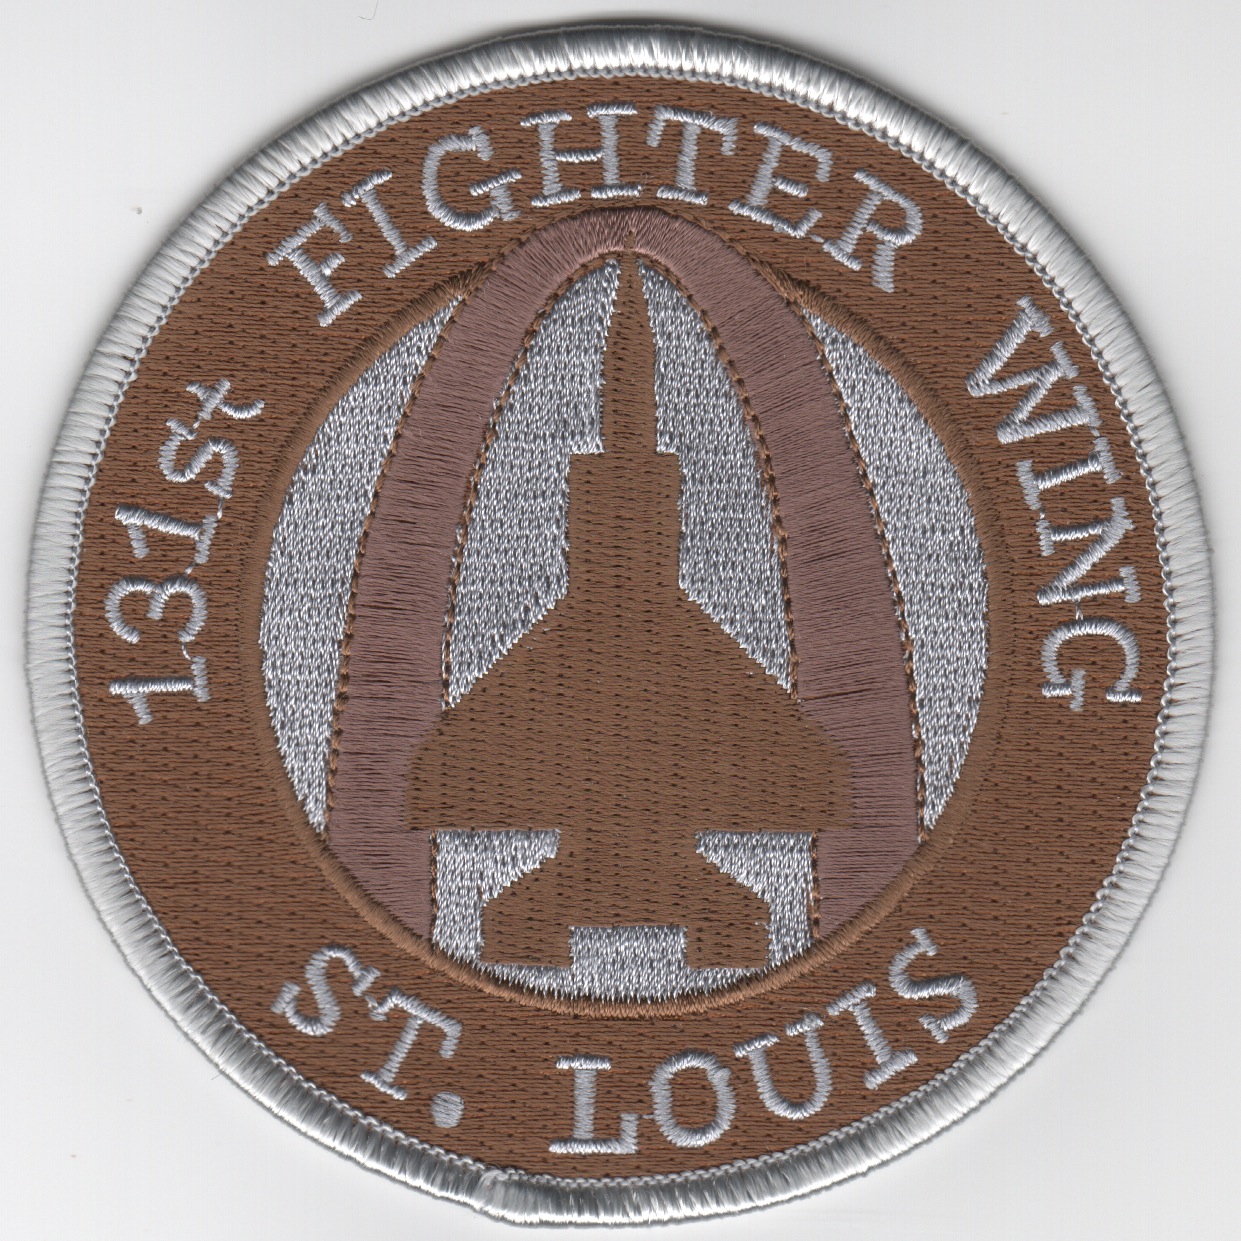 131FW 'St. Louis' Patch (Desert)